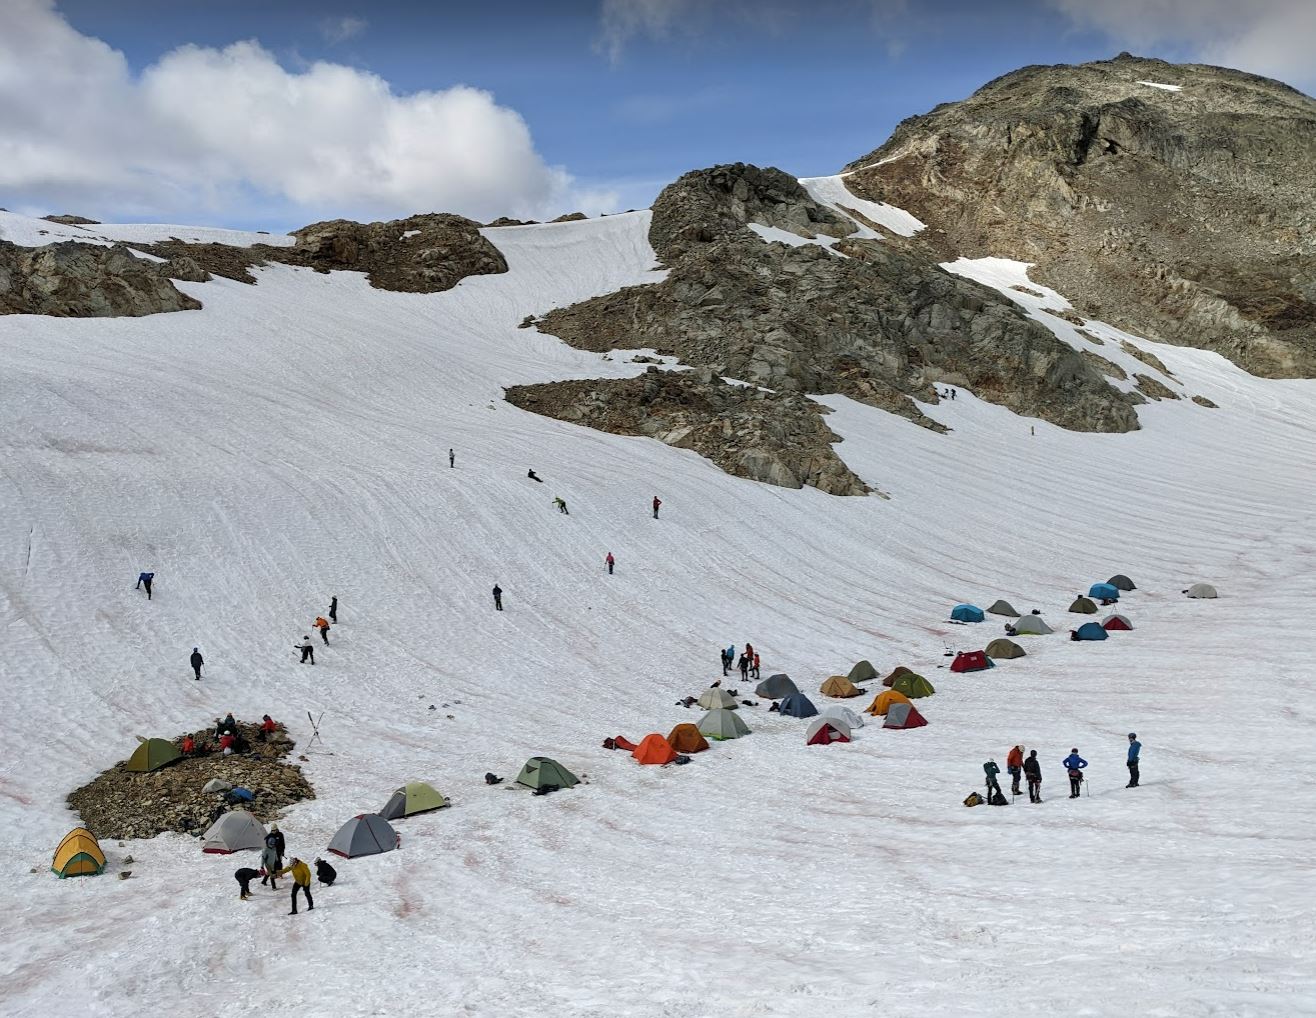 Camp on the Glacier PC: Issac Borrego